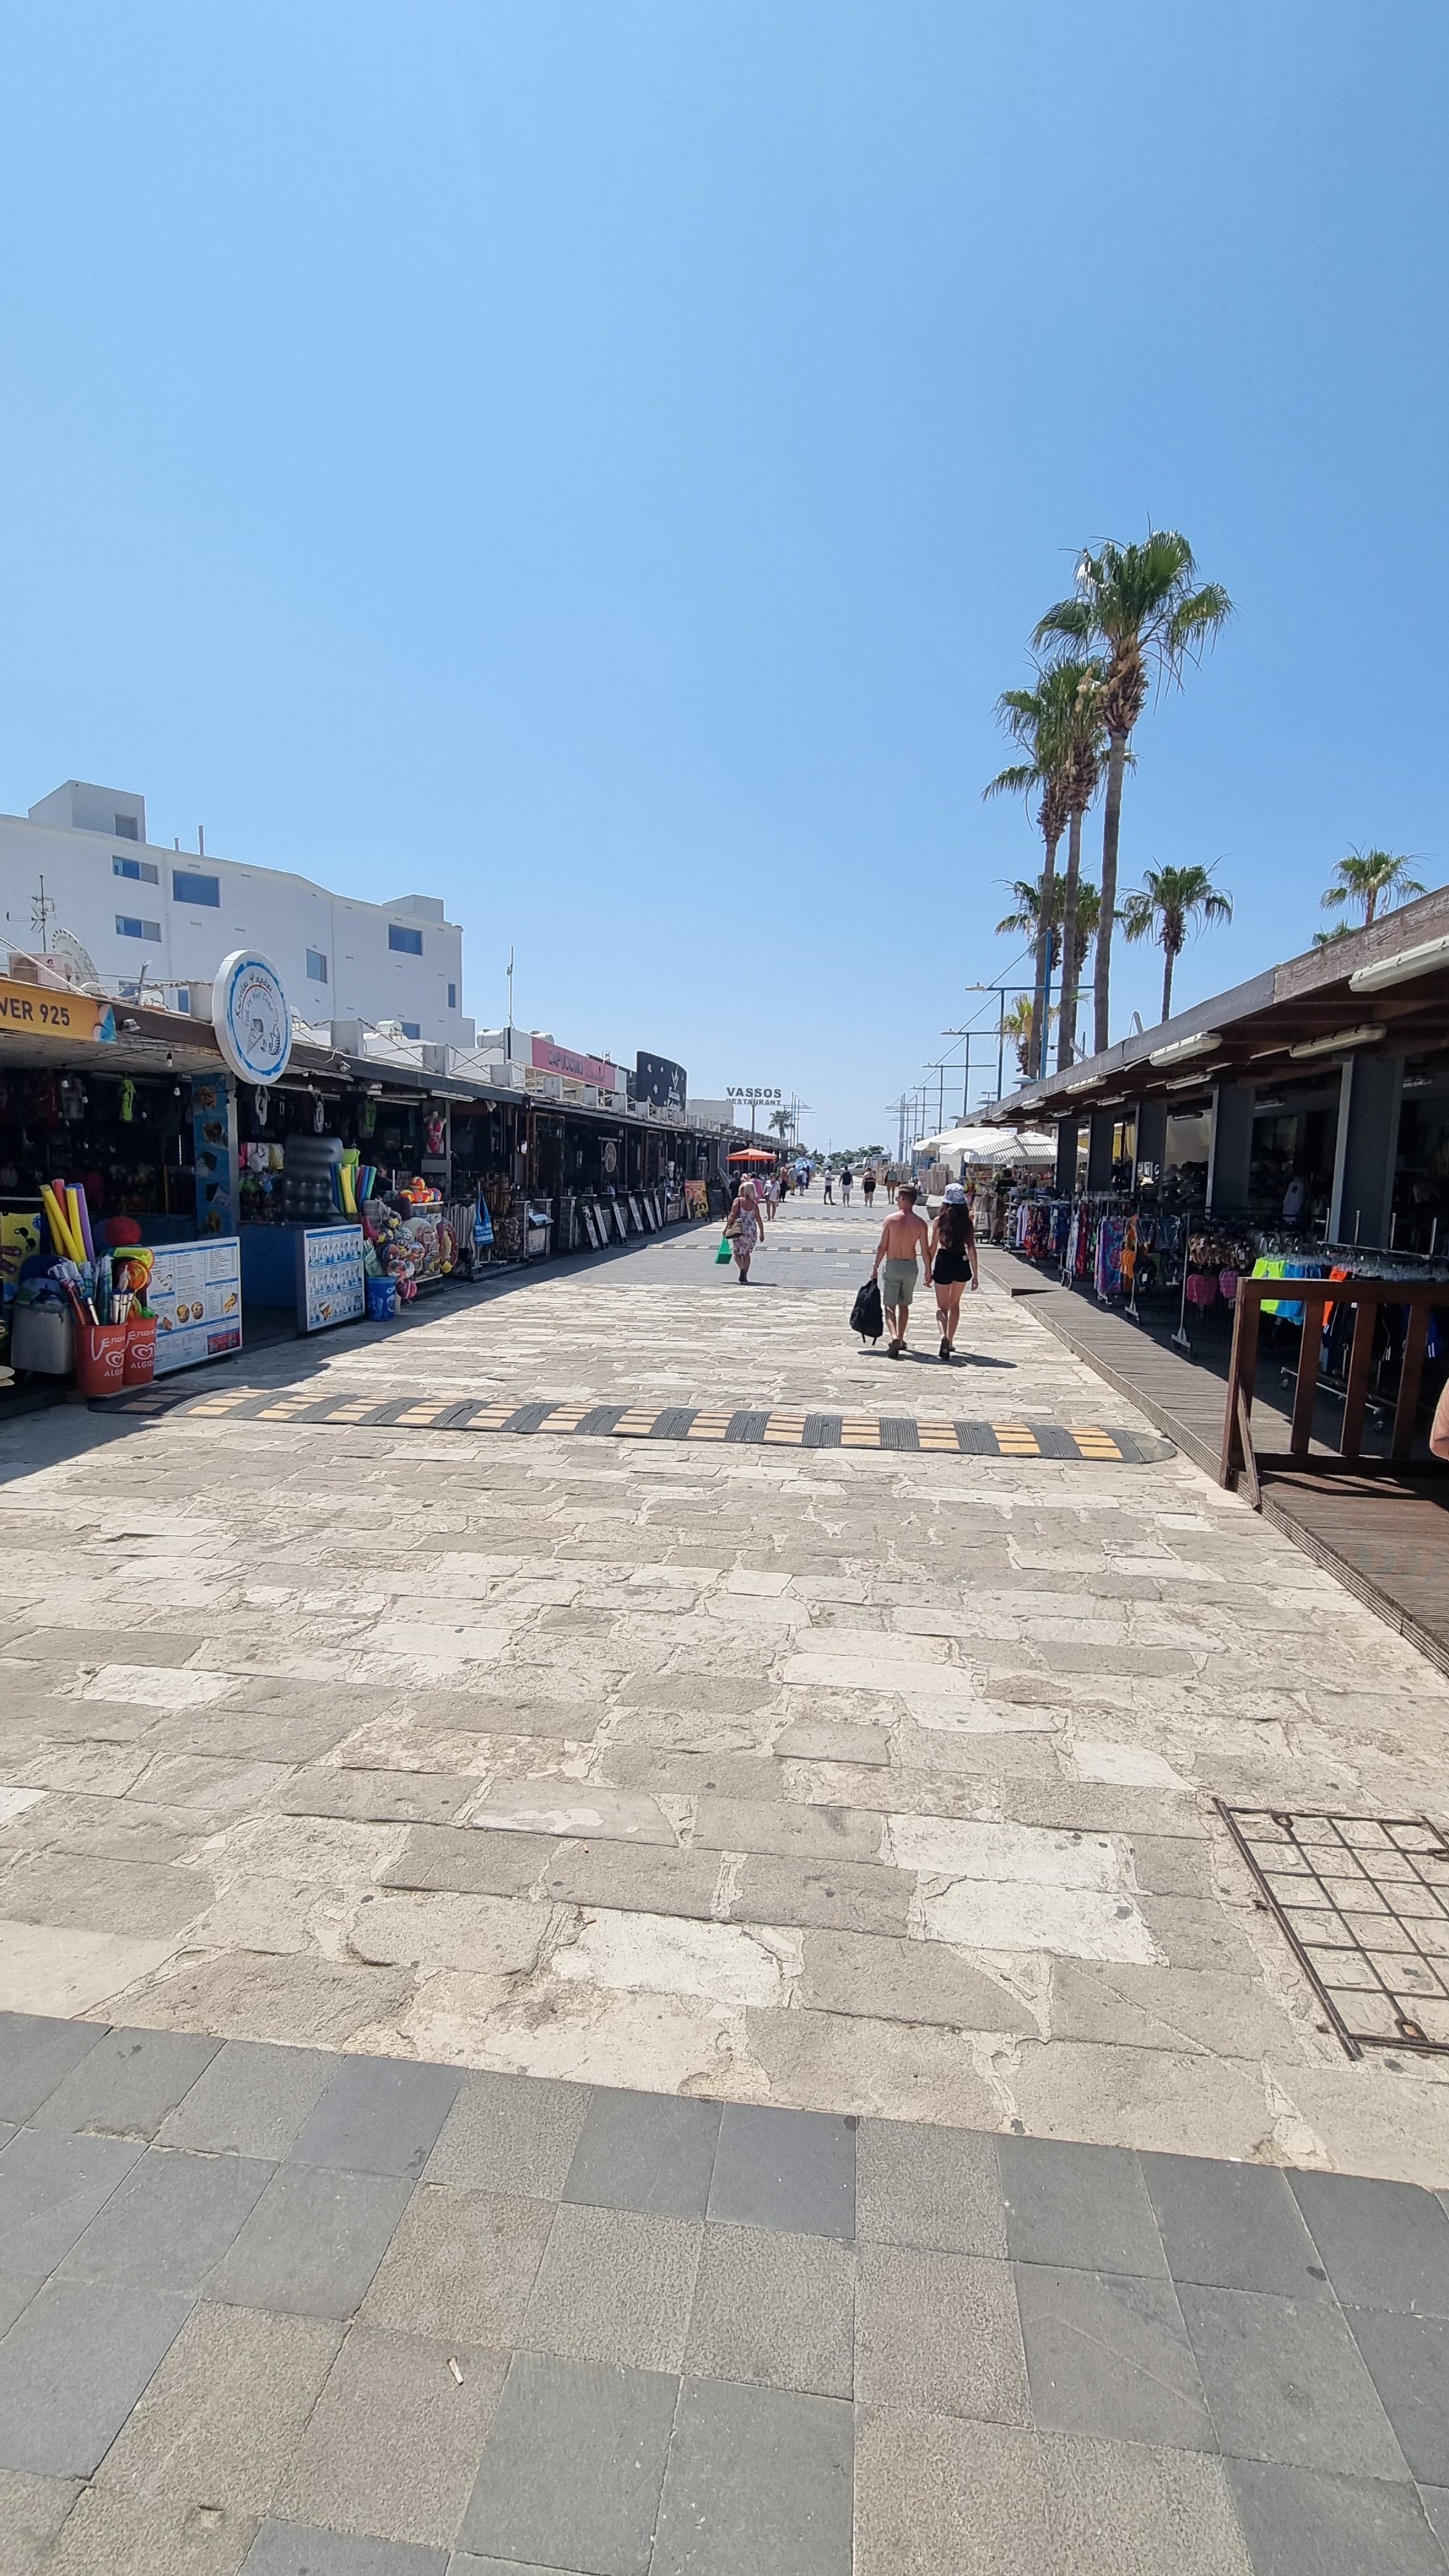 Shopping area in Ayia Nappa near the beach